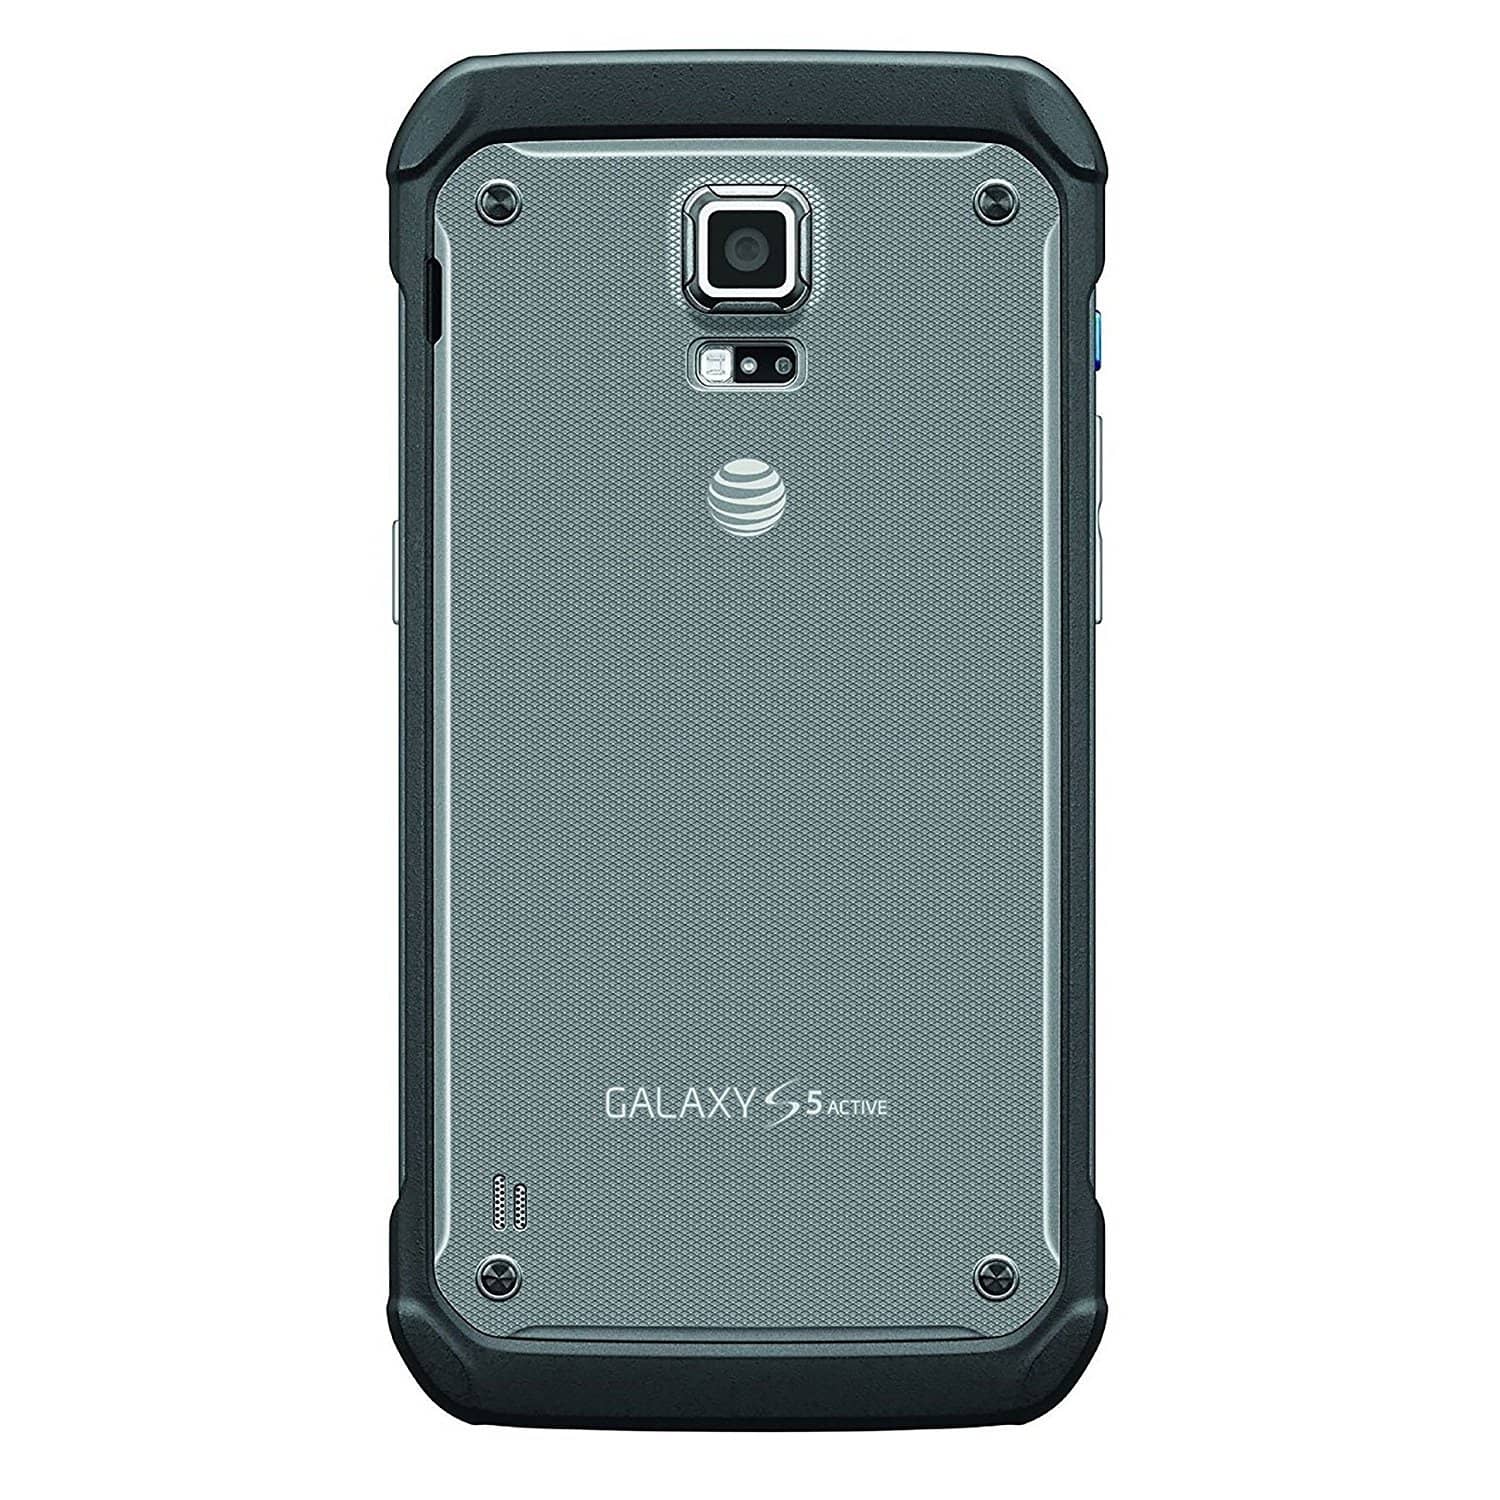 Samsung Galaxy S5 Active G870a 16GB Unlocked - Titanium Gray